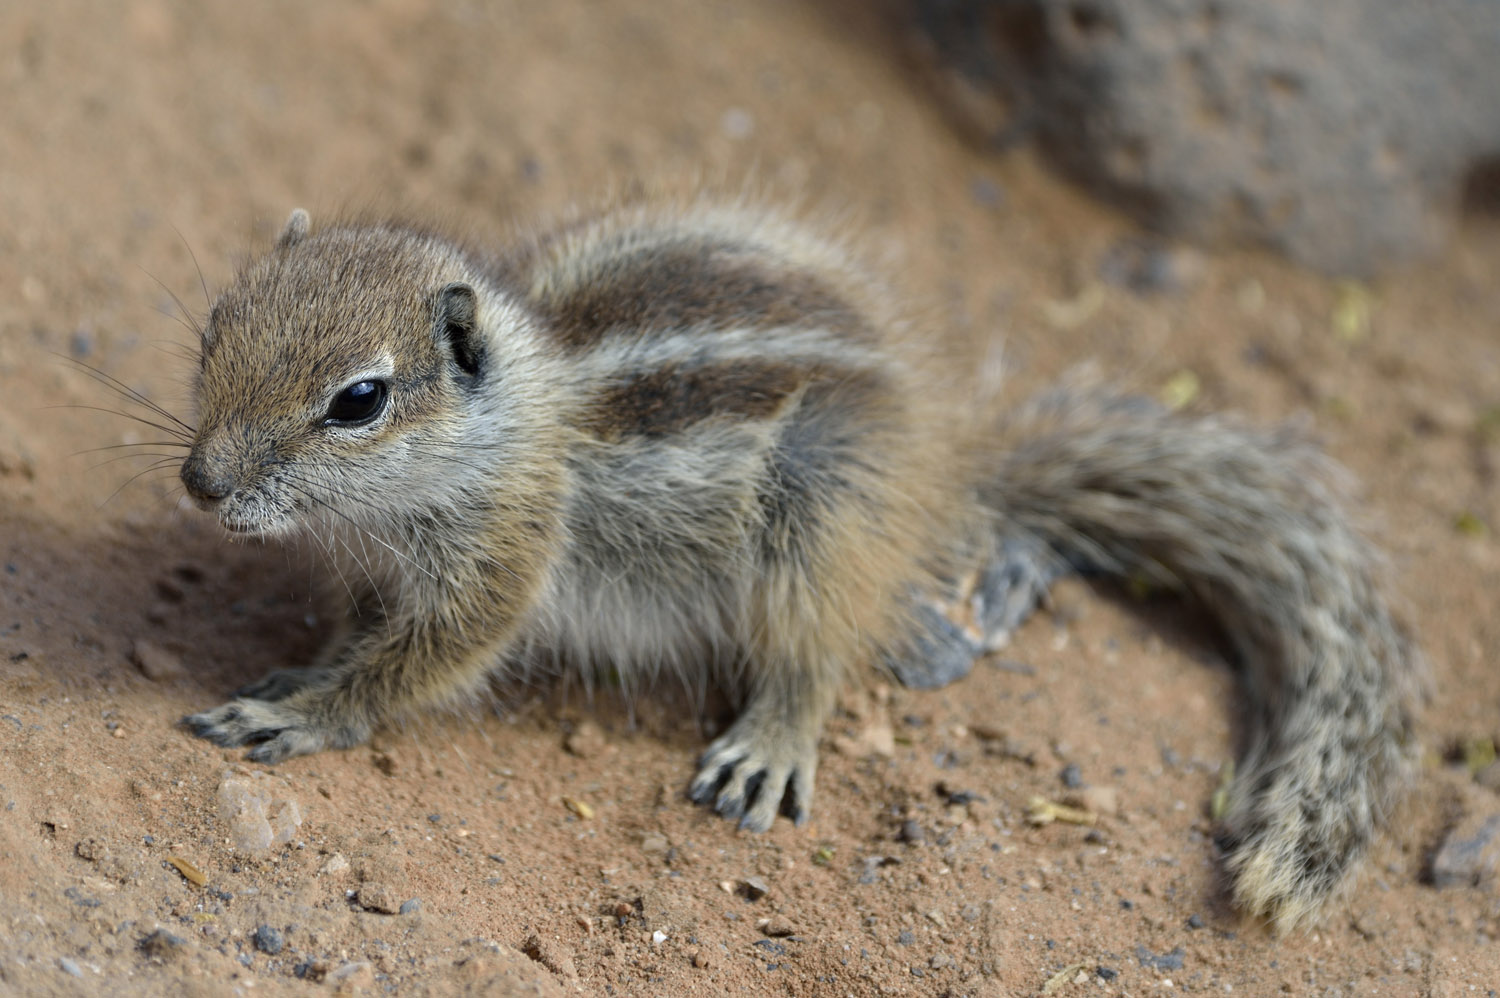 Barbary Ground Squirrel, Fuerteventura